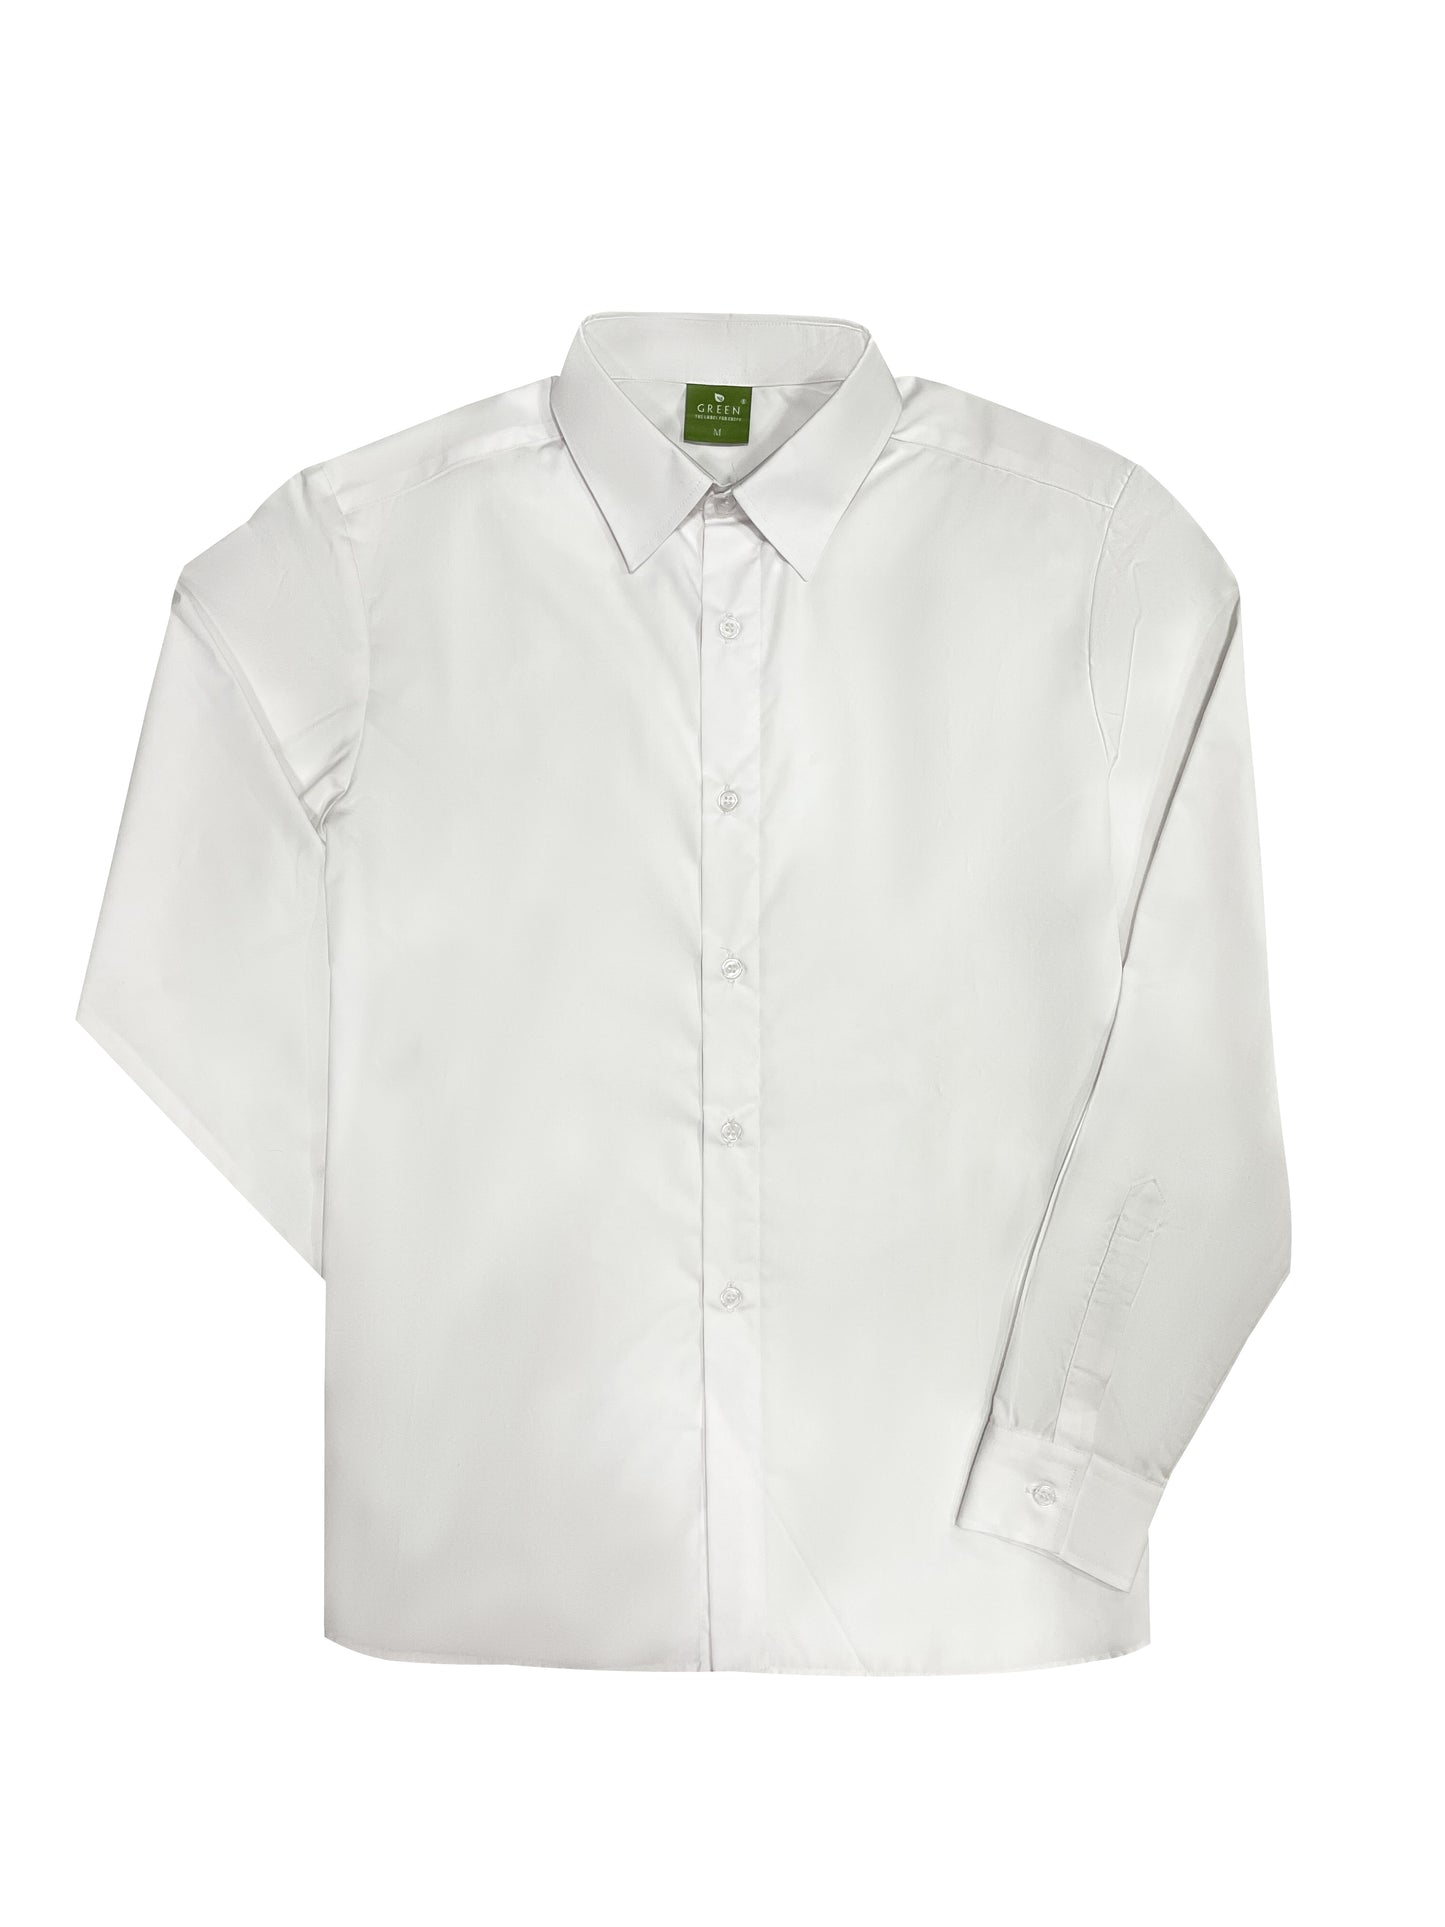 APSN White Service Shirt, Services